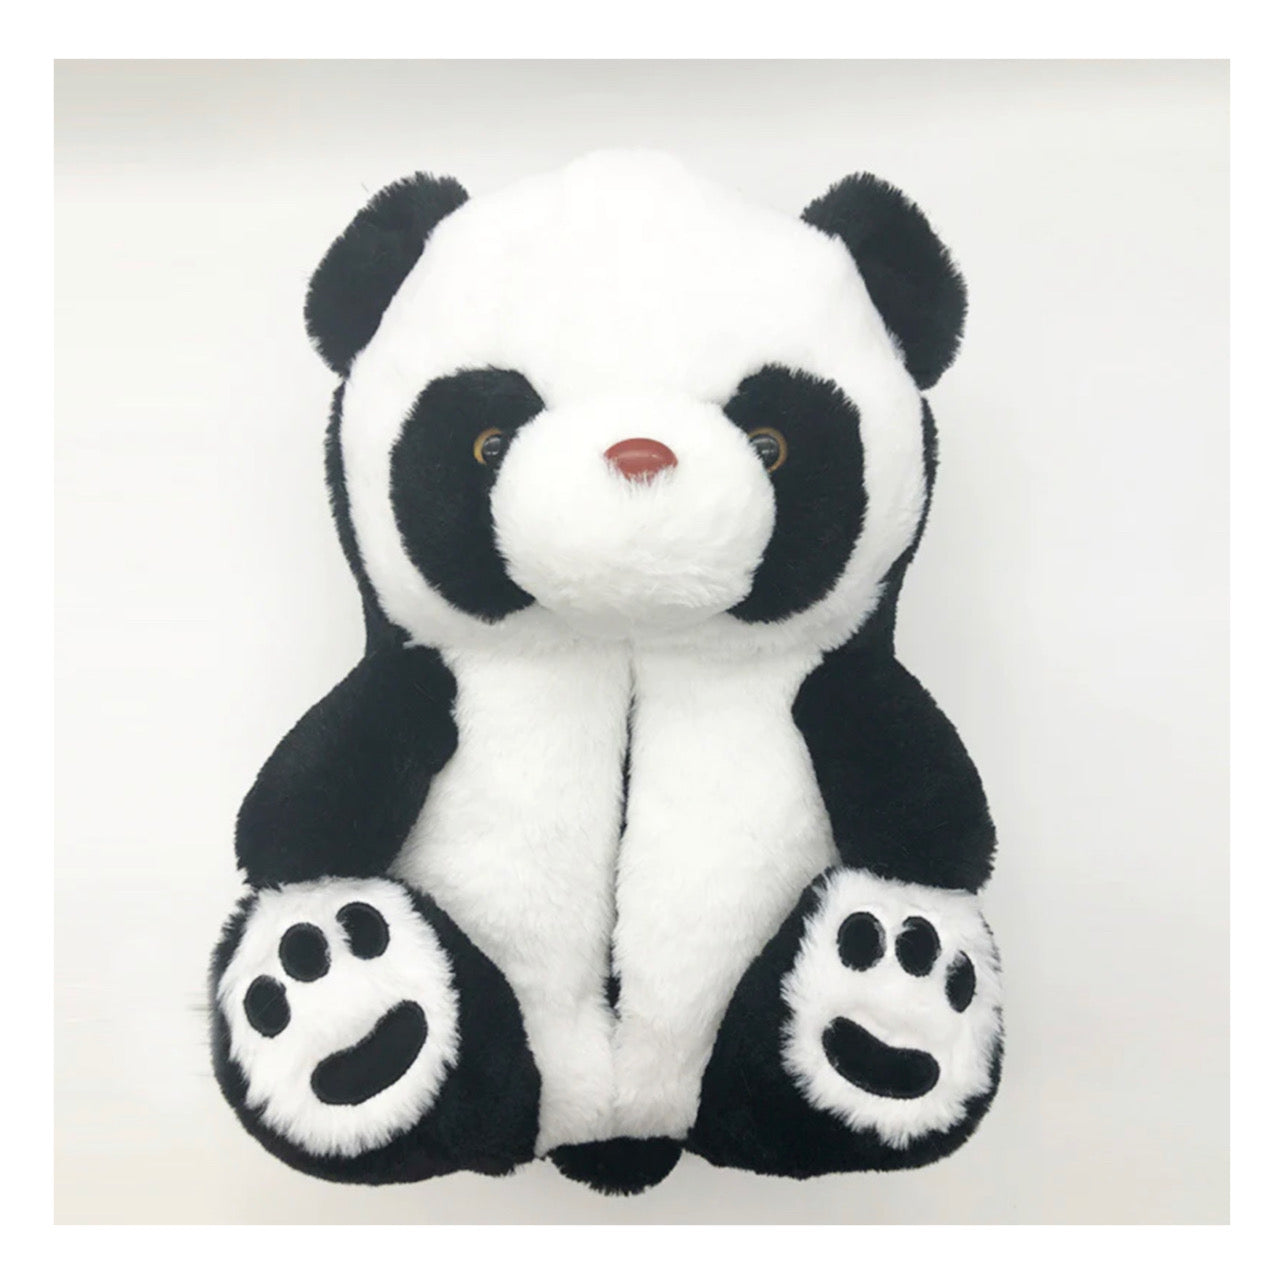 “Panda” Slippers